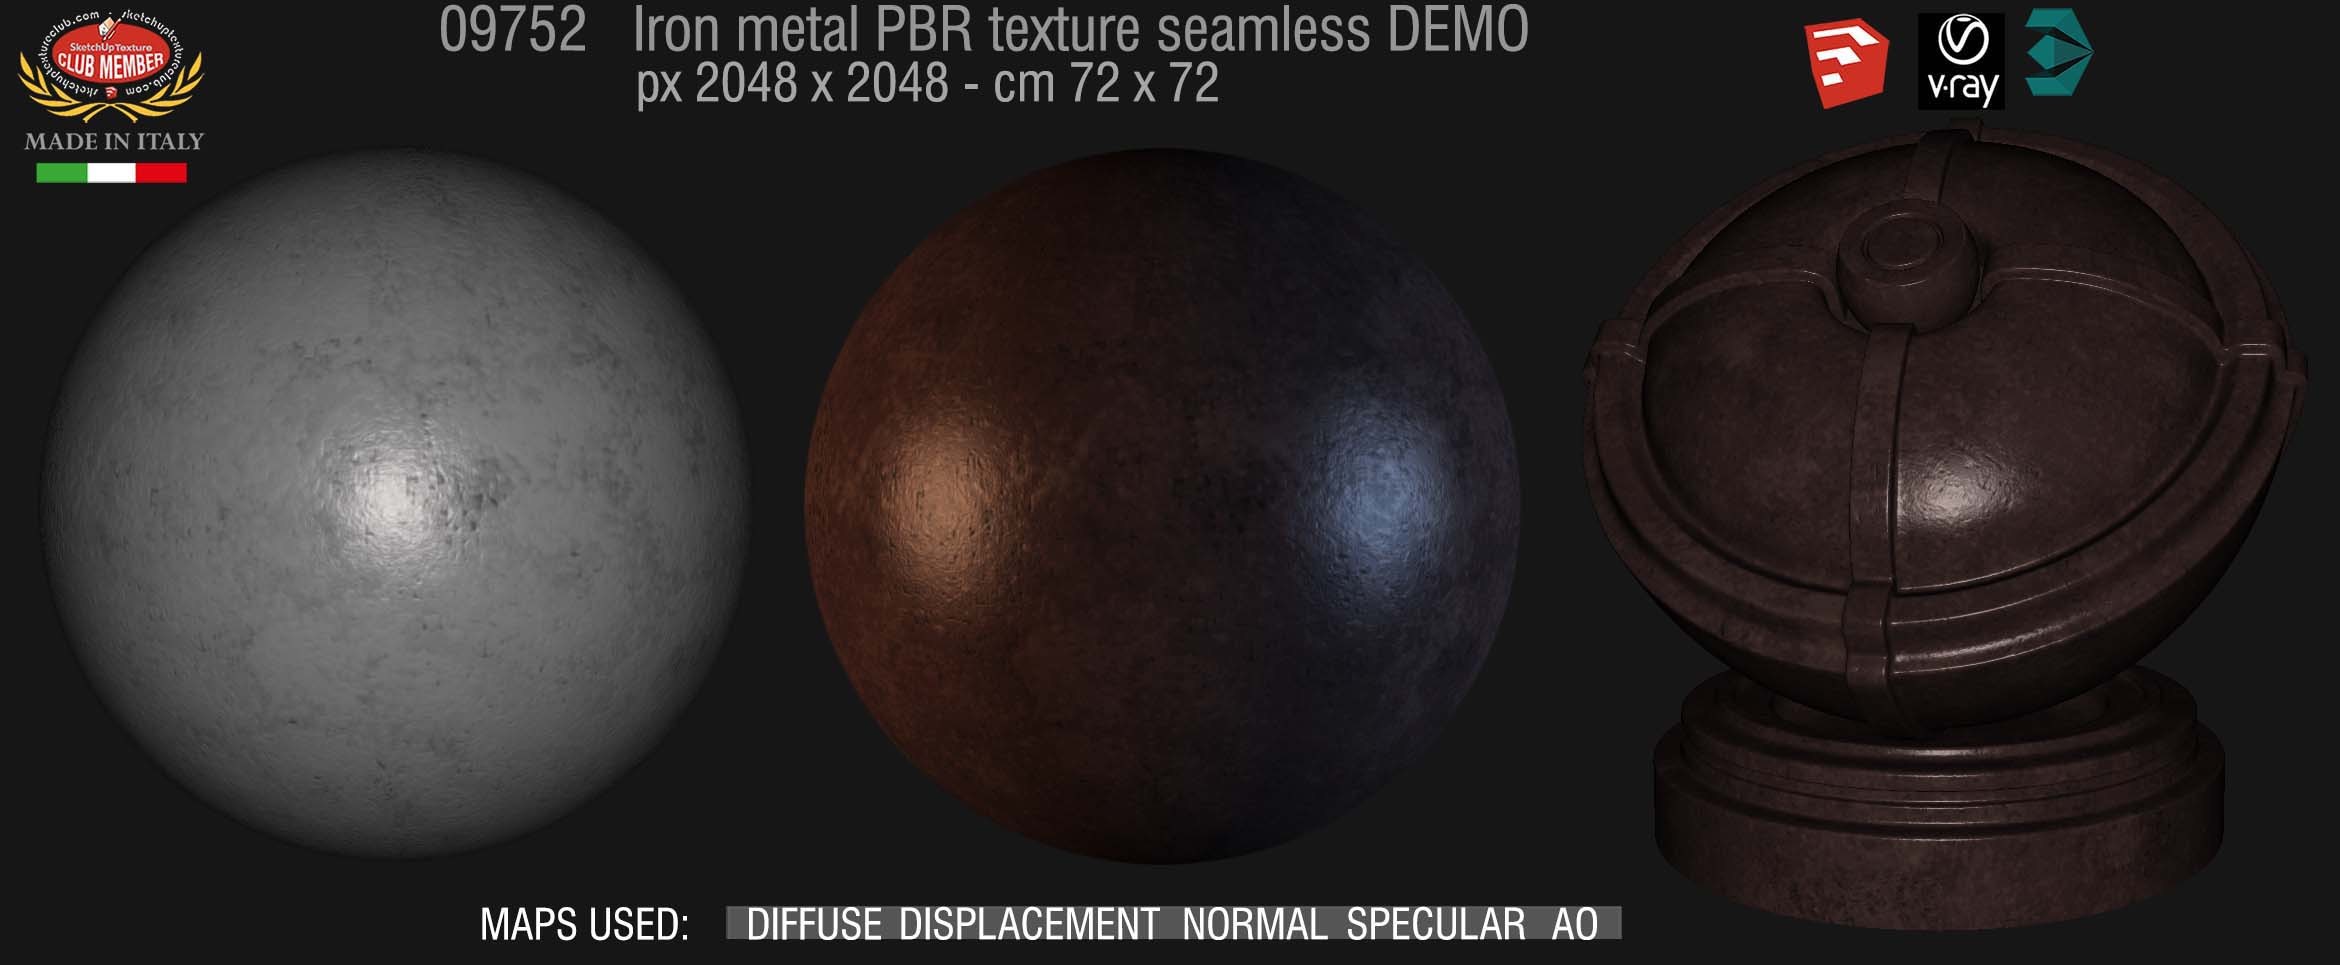 09752 Iron metal PBR texture seamless DEMO